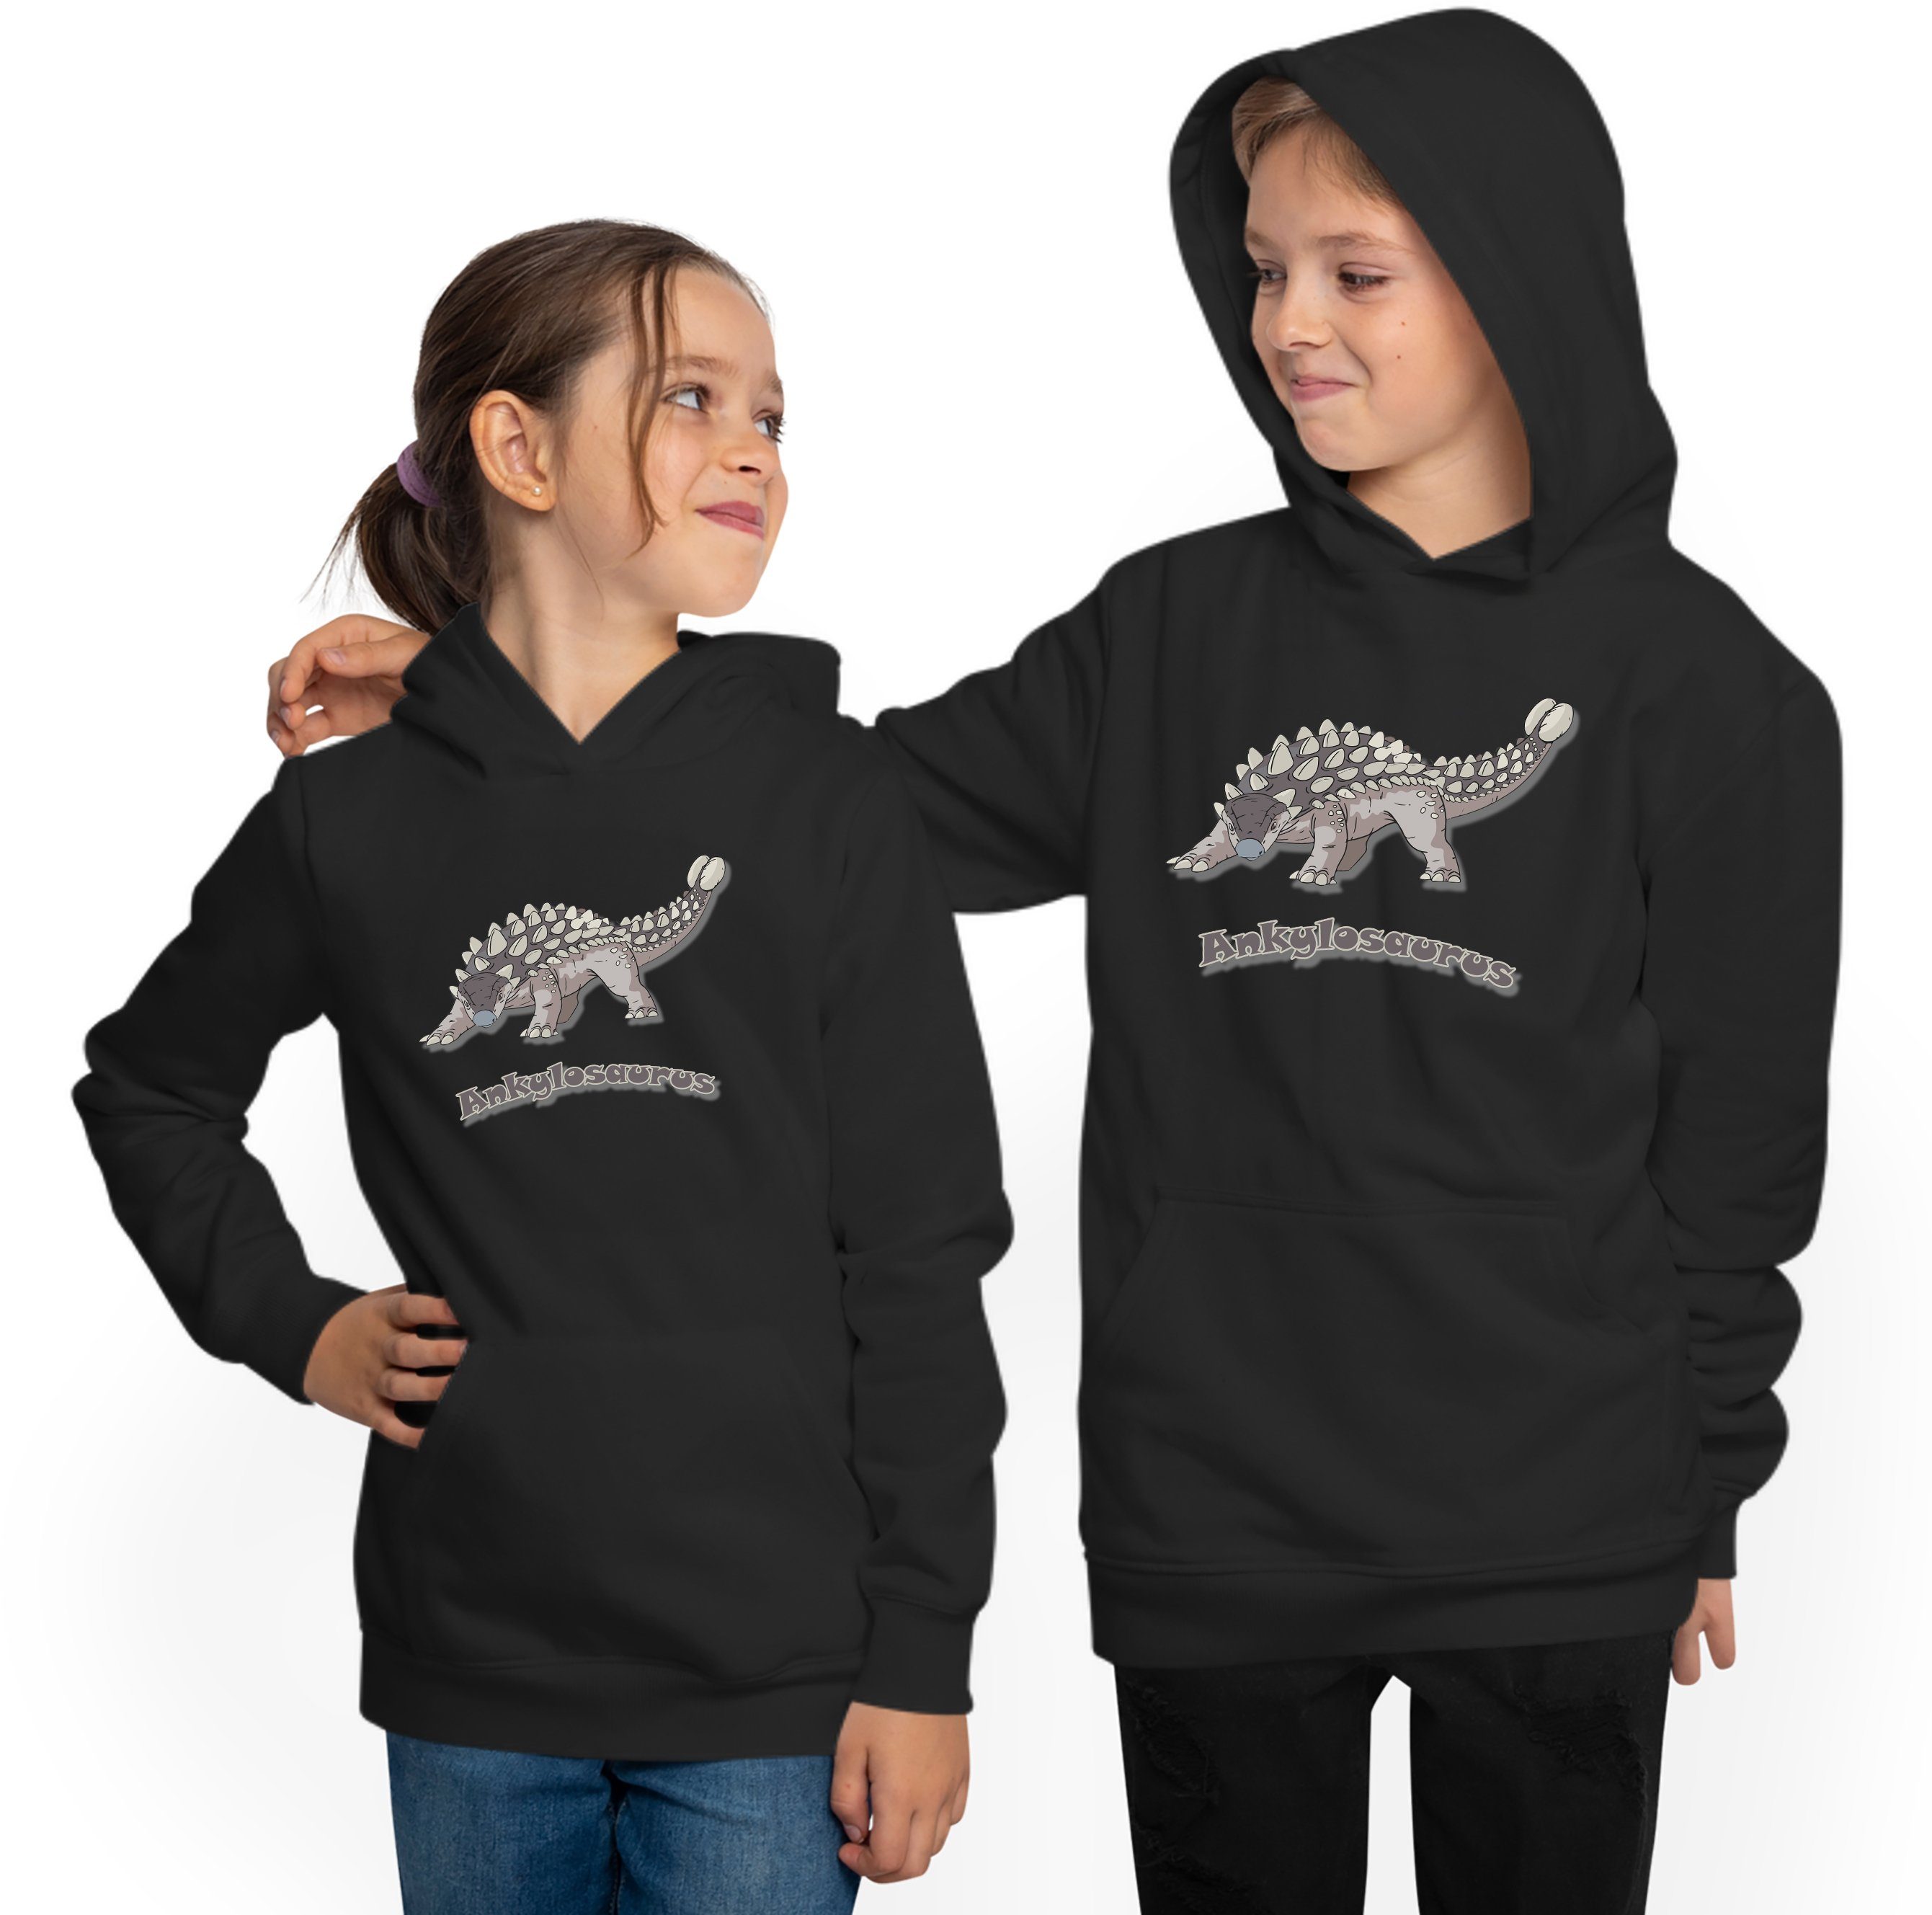 MyDesign24 Hoodie Kinder Aufdruck, Sweatshirt Kapuzensweater - mit i63 Kapuzen Ankylosaurus Mit